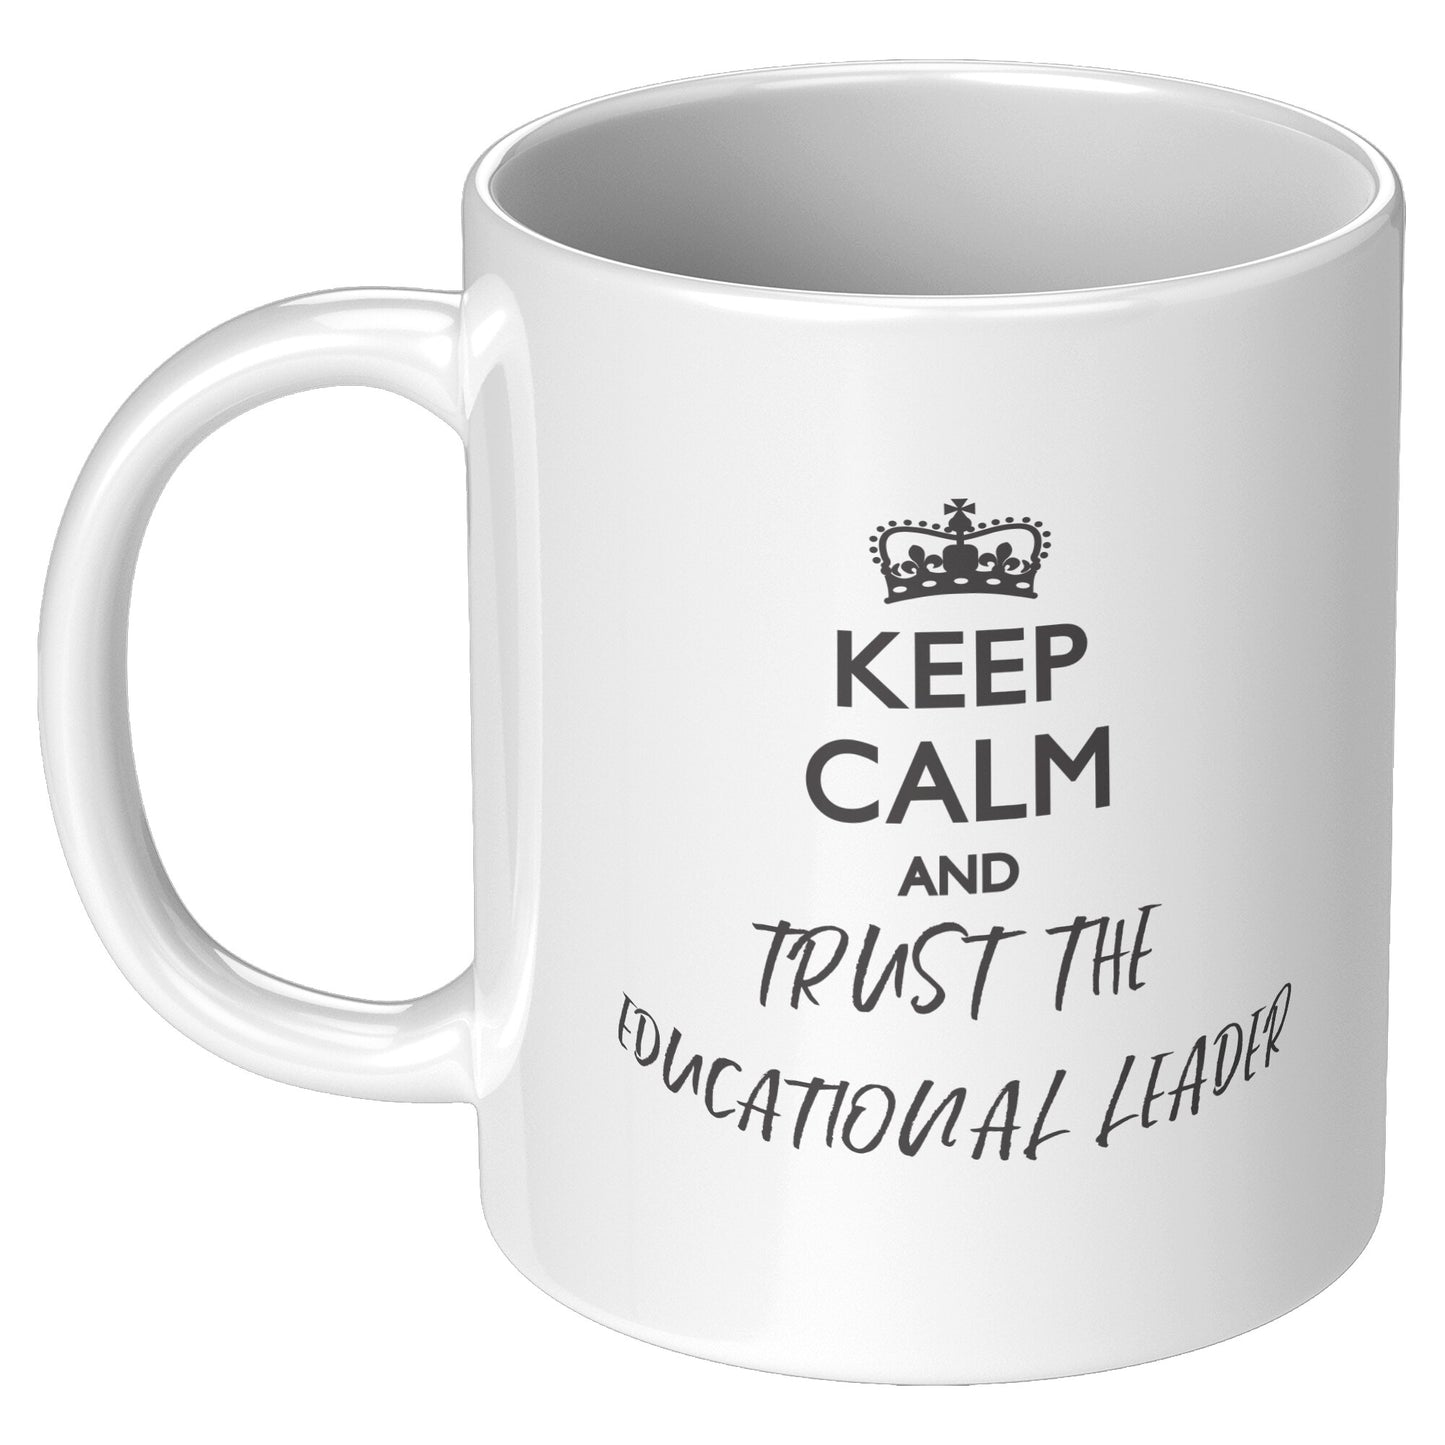 Keep Calm and Trust the Educational Leader Mug